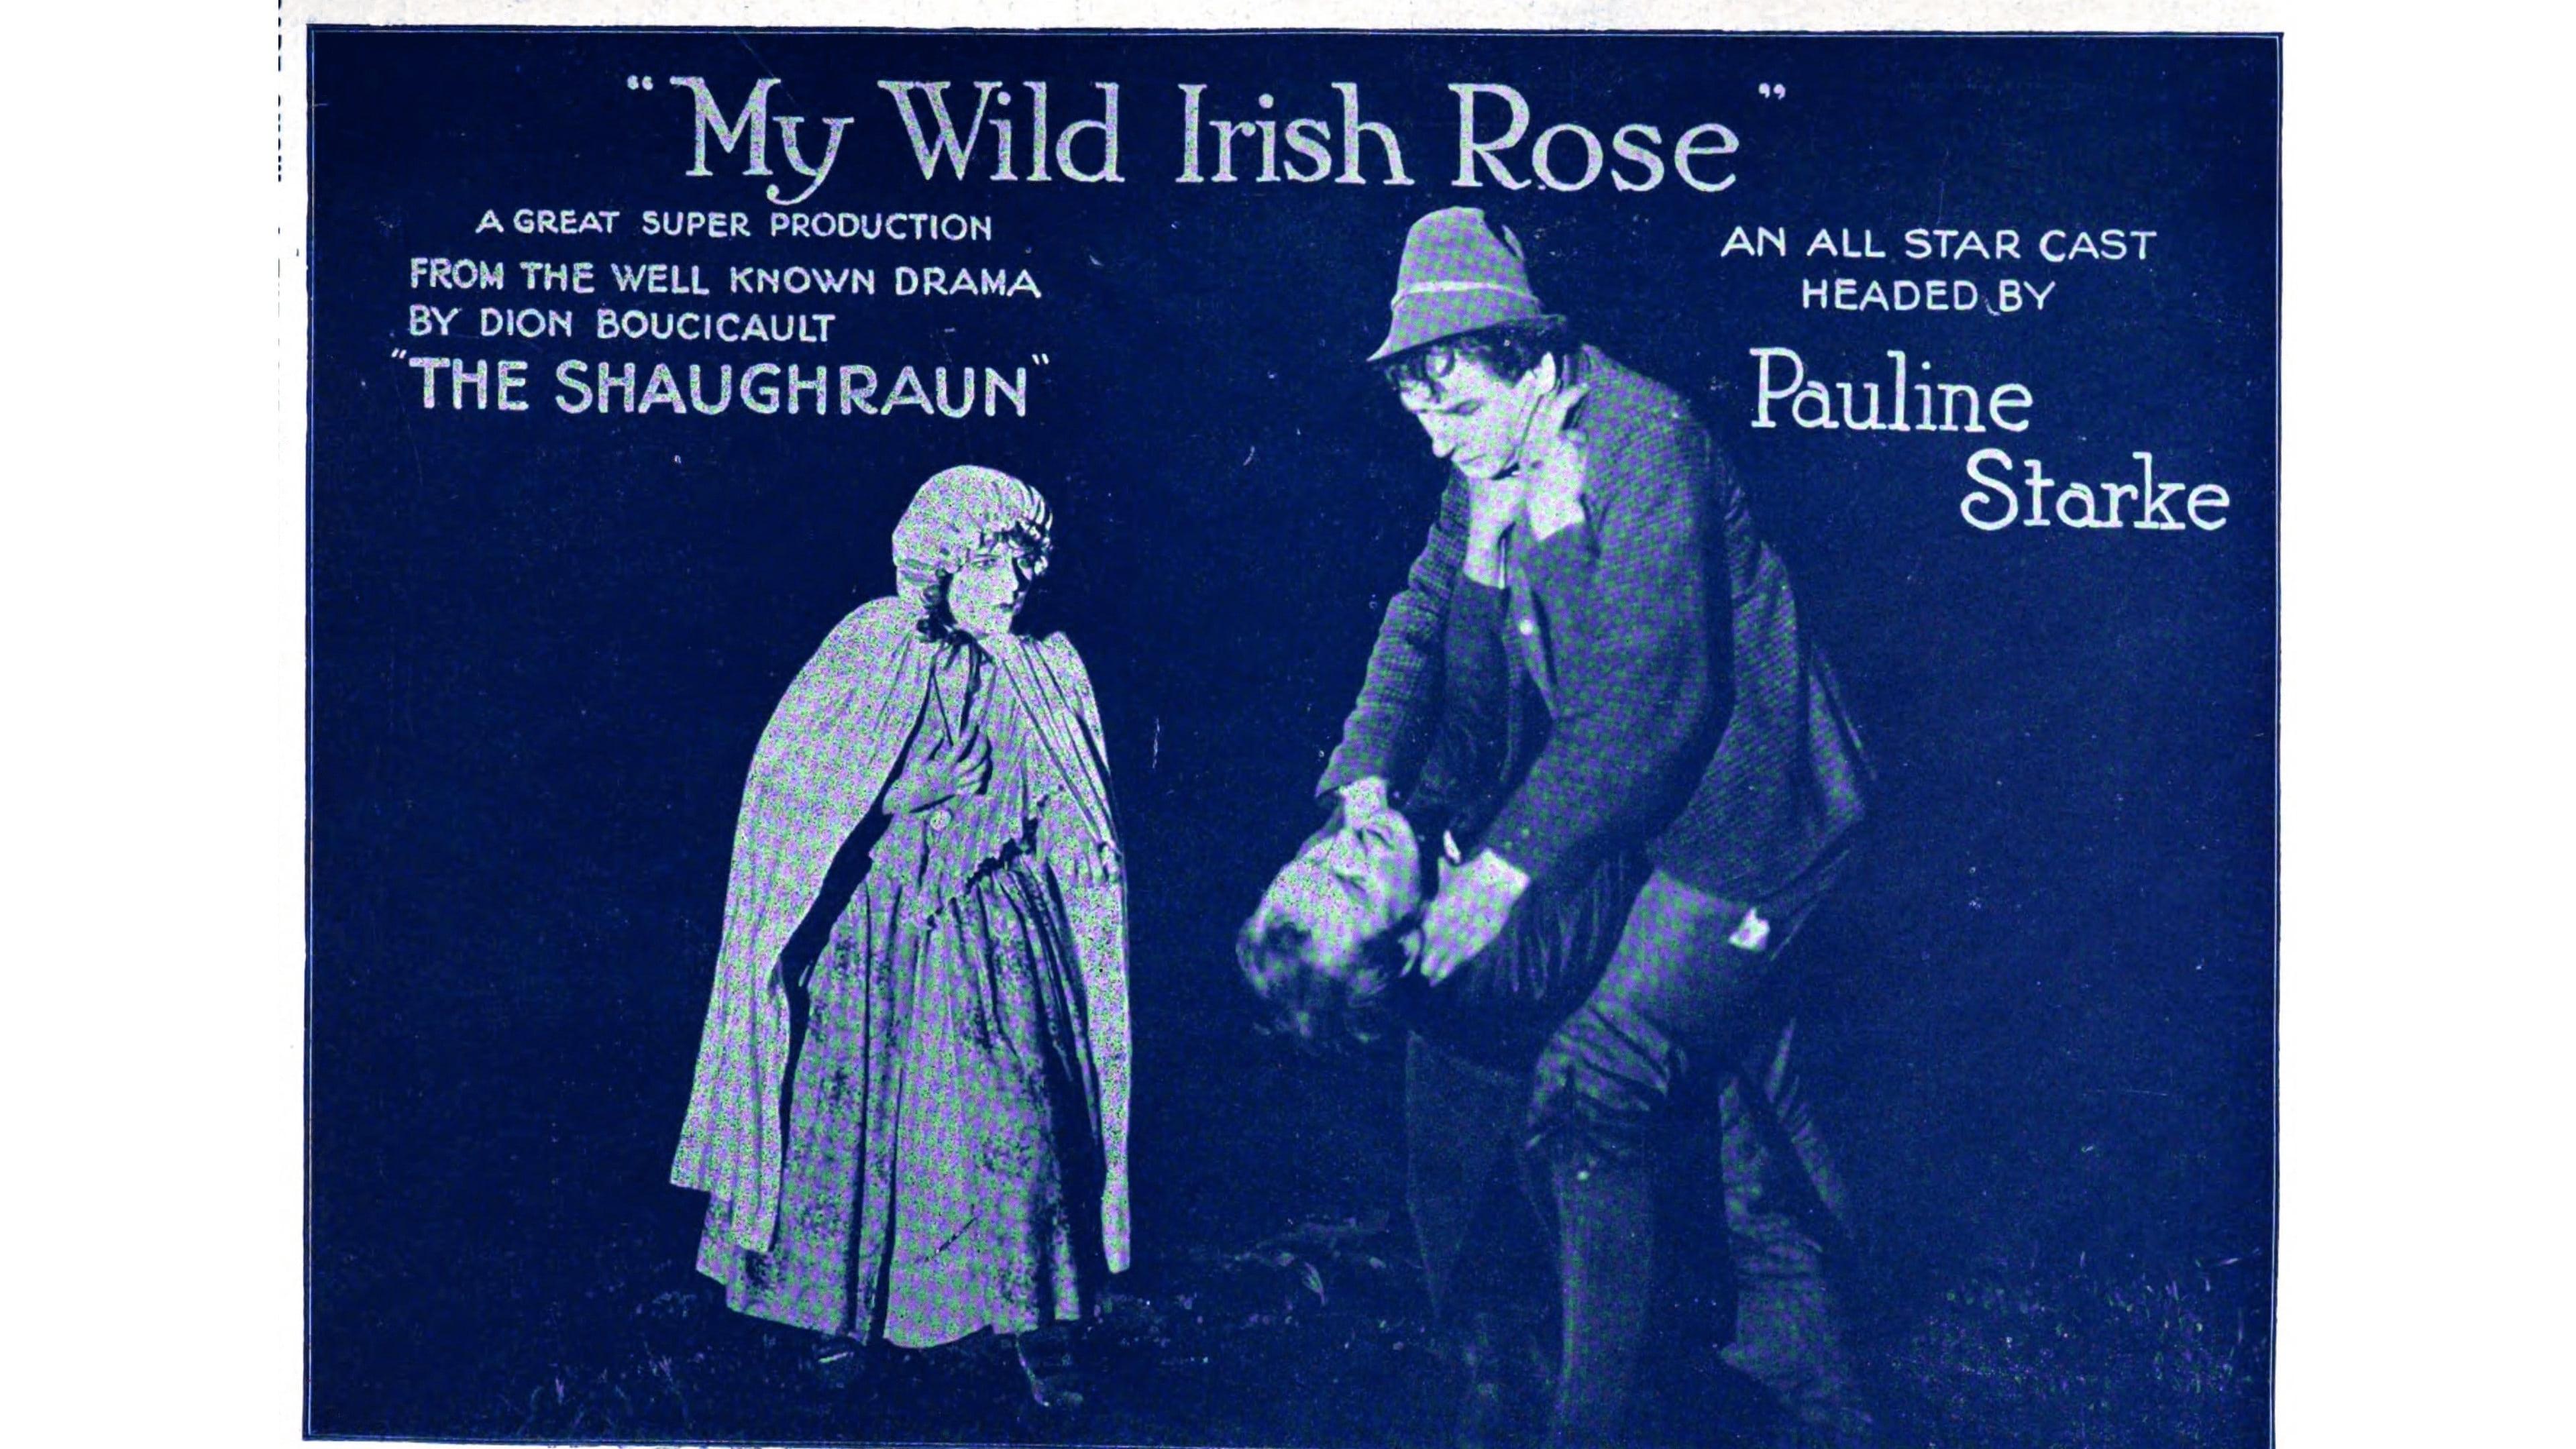 My Wild Irish Rose backdrop